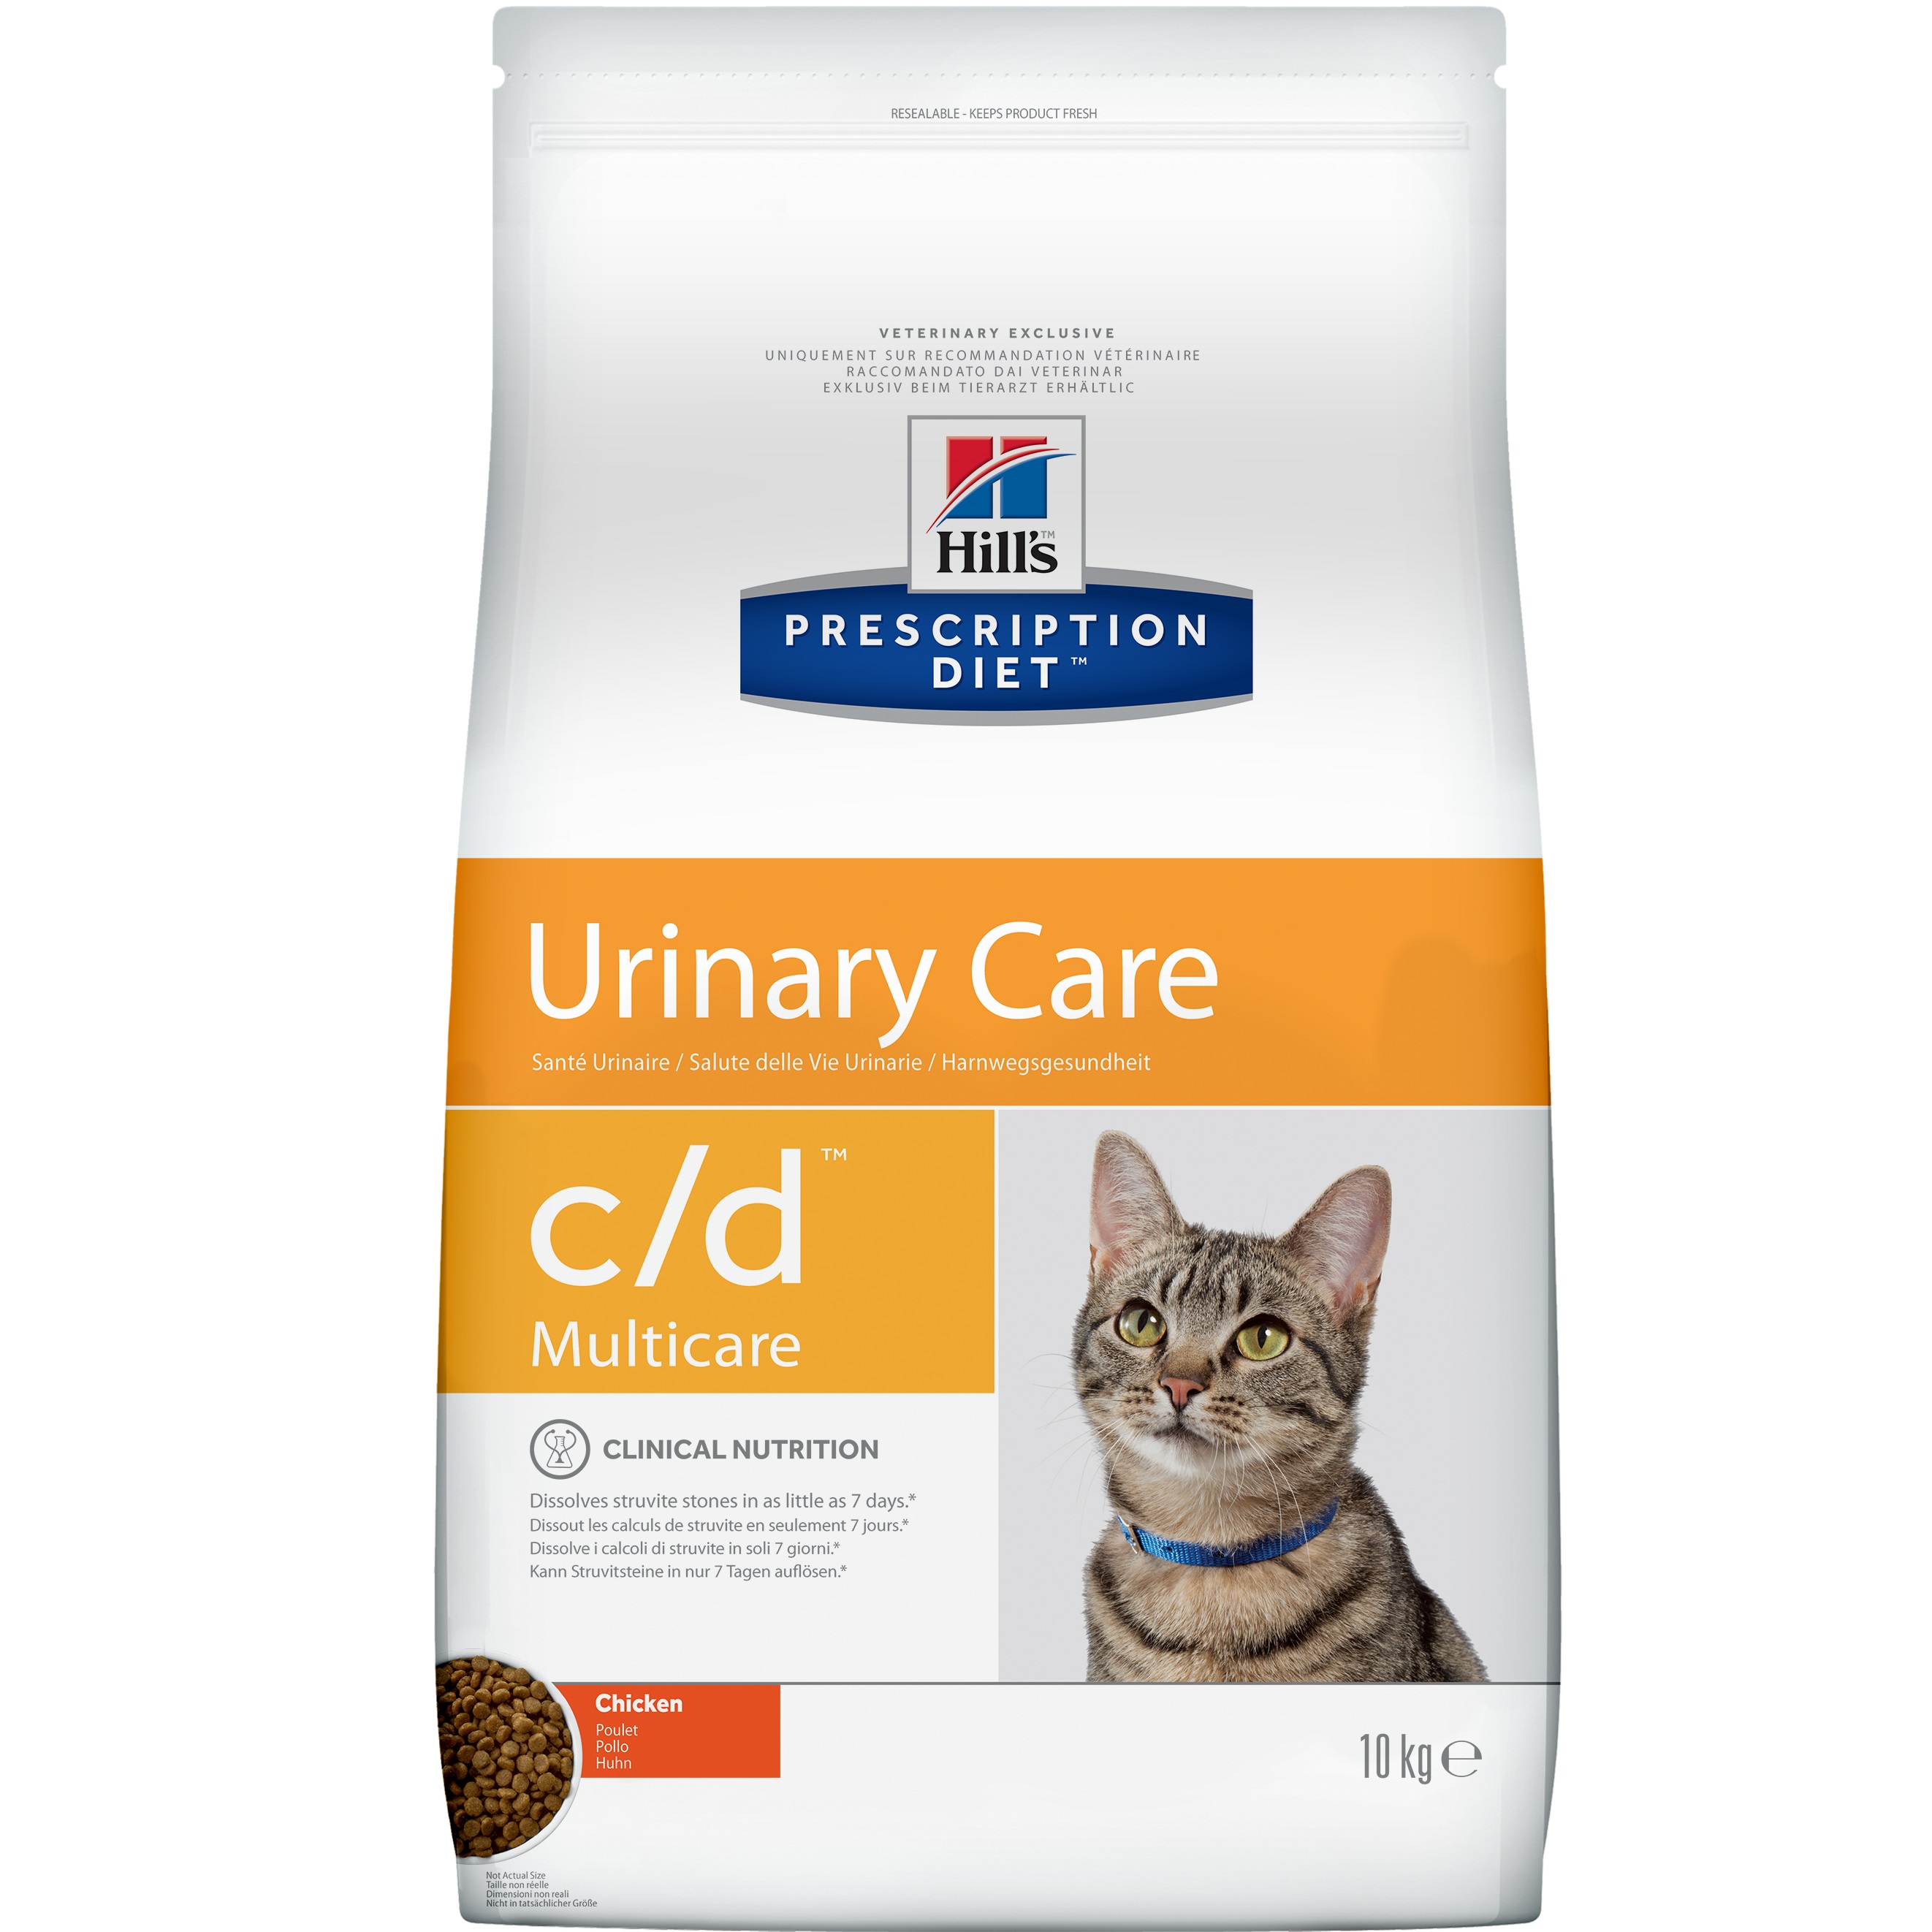 Hill's Prescription Diet c/d Multicare Urinary Care сухой корм для кошек, с курицей, 10кг